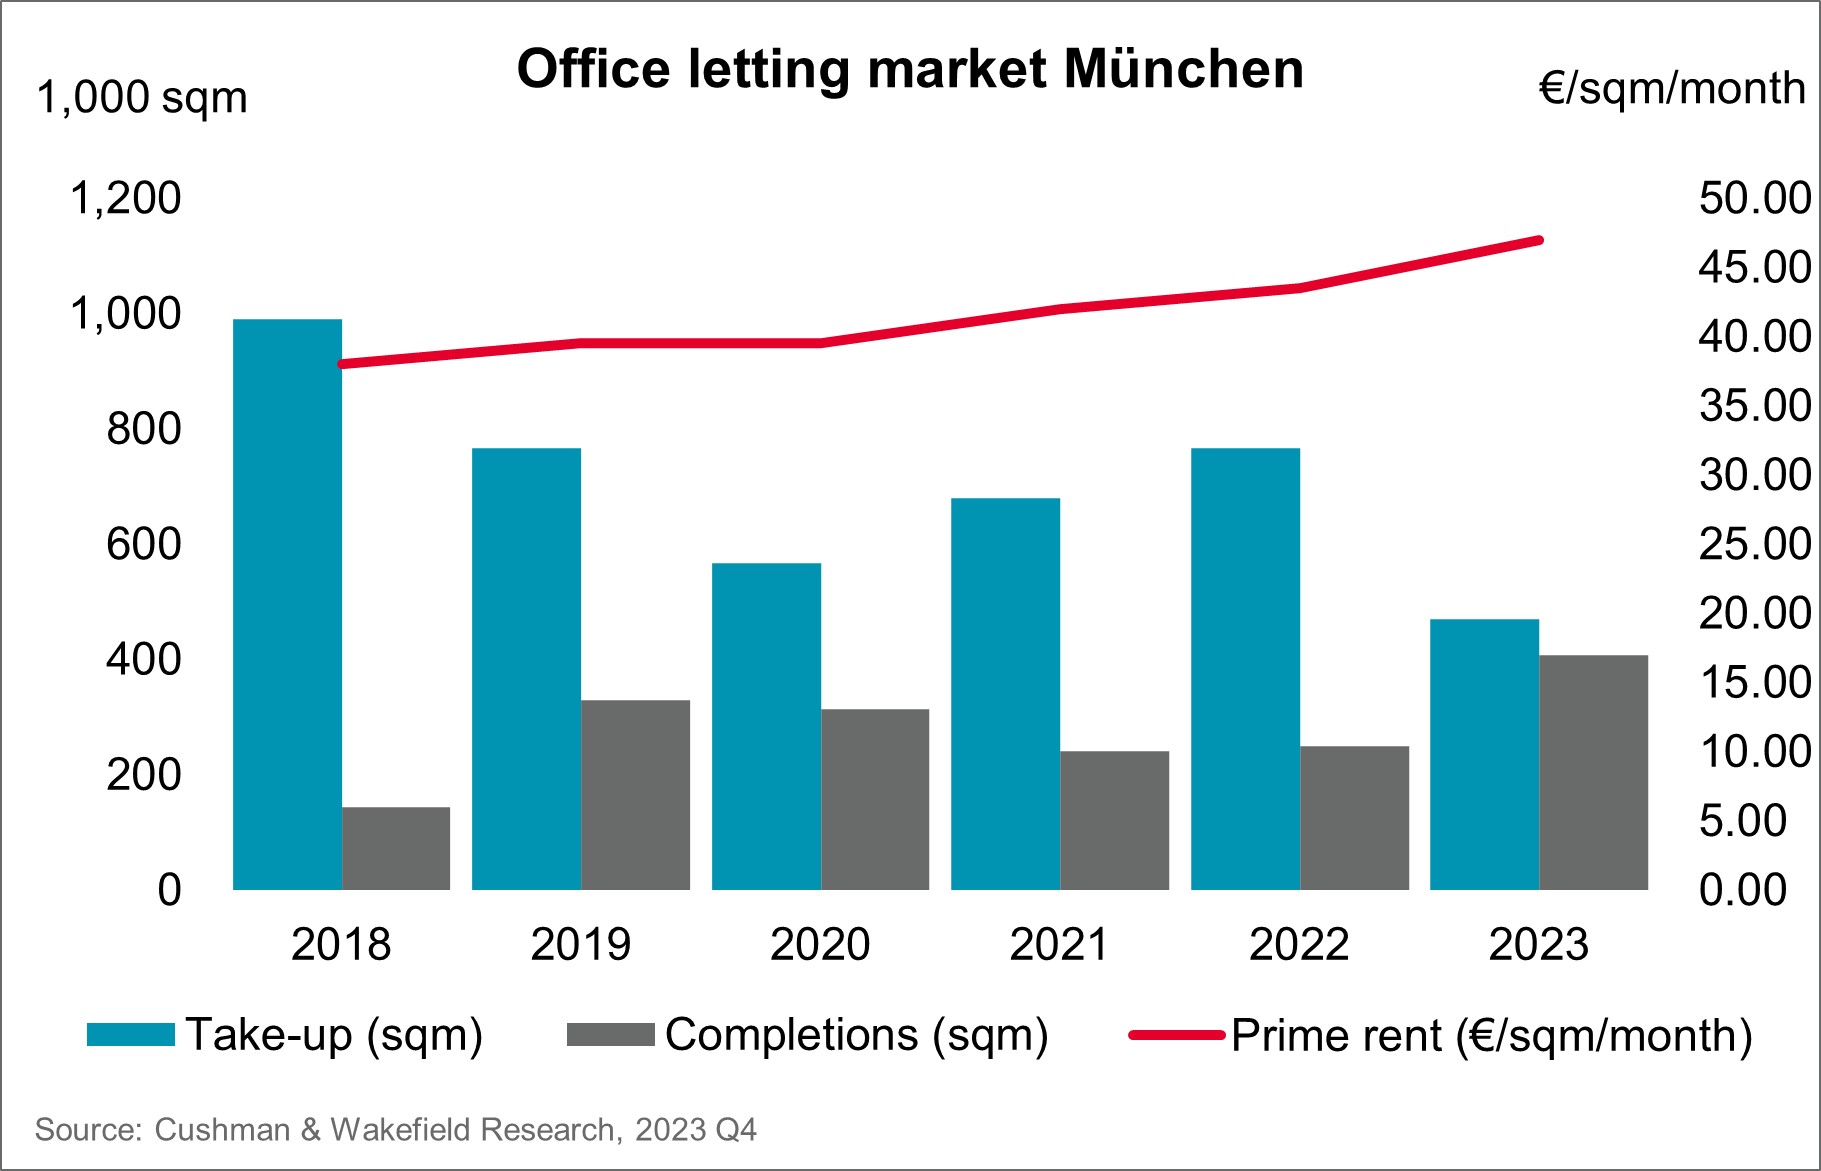 Office letting market Munich